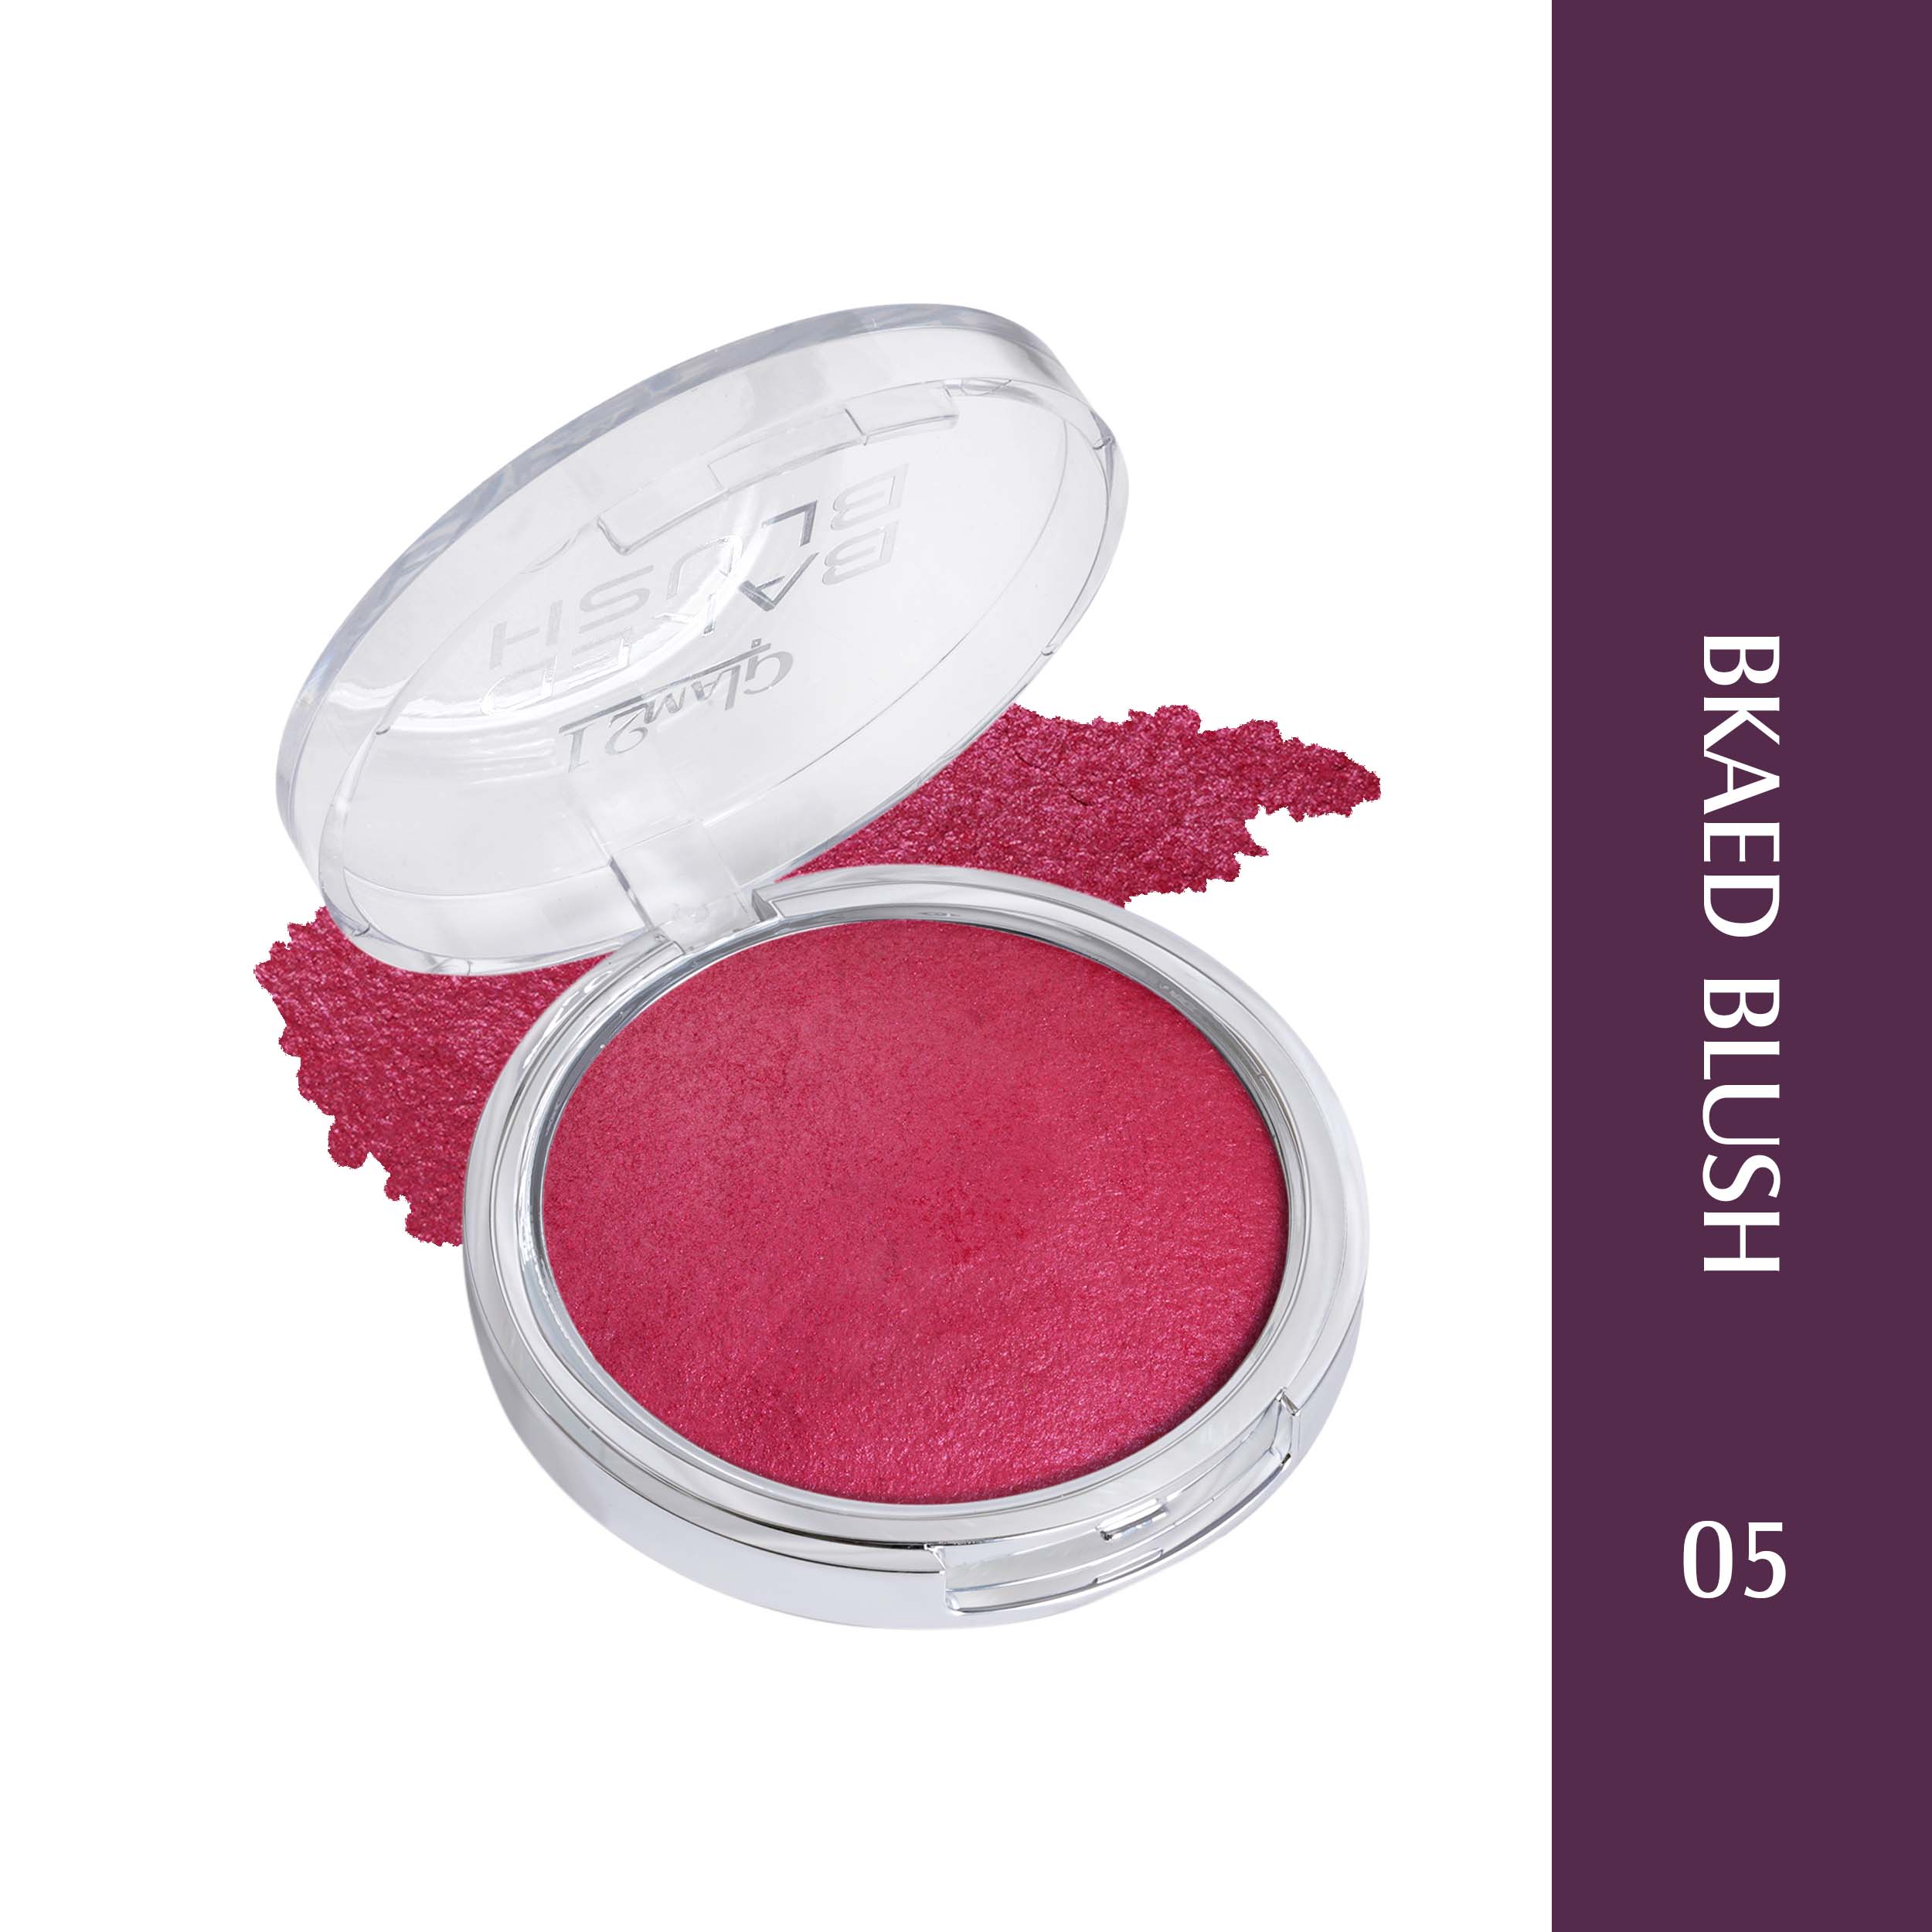 Glam21 Baked Blush Highly Pigmented Formula, Long-Lasting, Illuminating Texture, 6g (Shade-05)